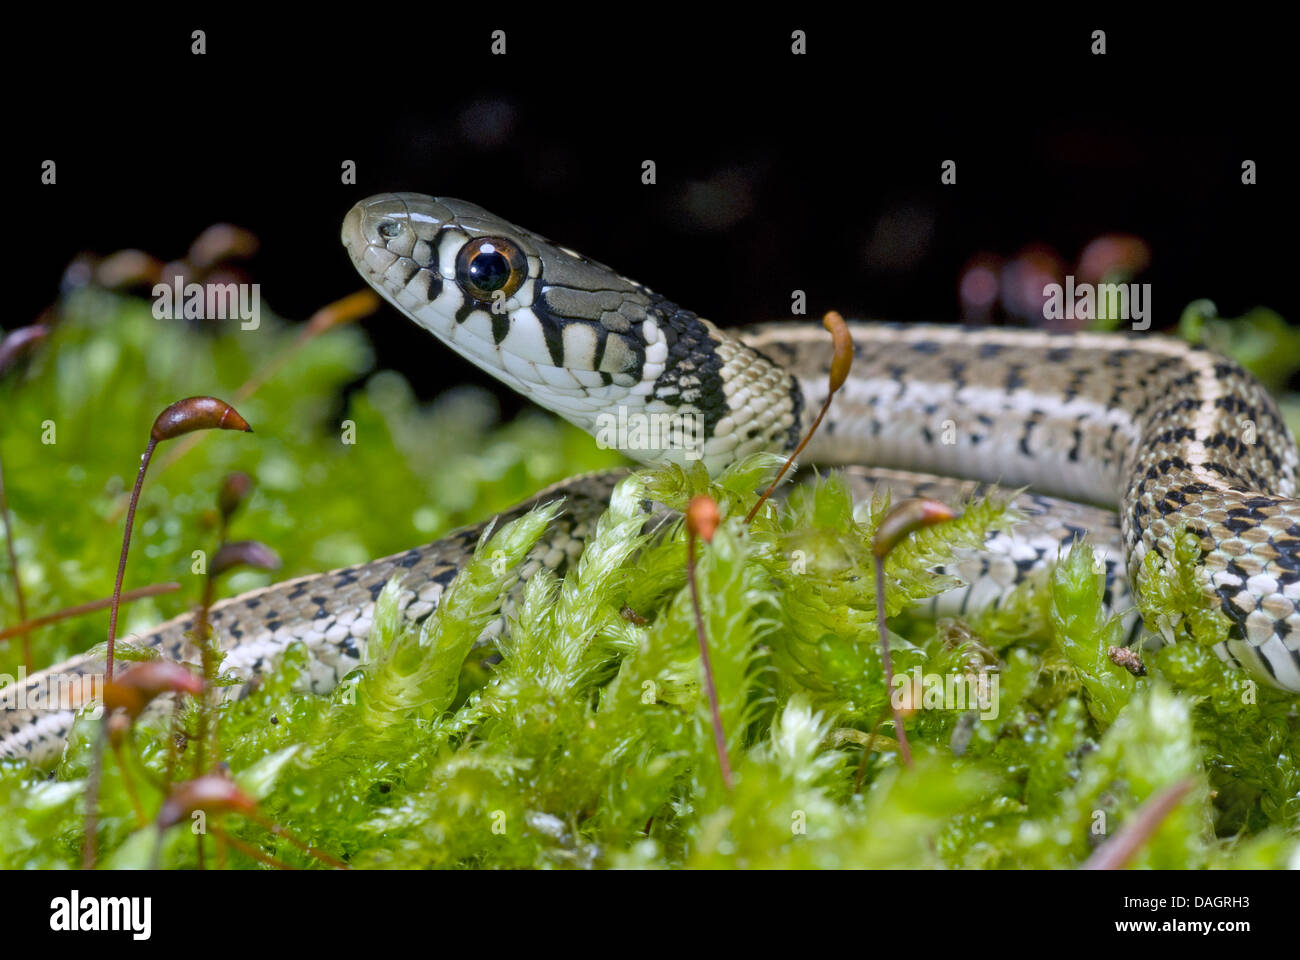 Giarrettiera a scacchi Snake (Thamnophis marcianus), ritratto Foto Stock